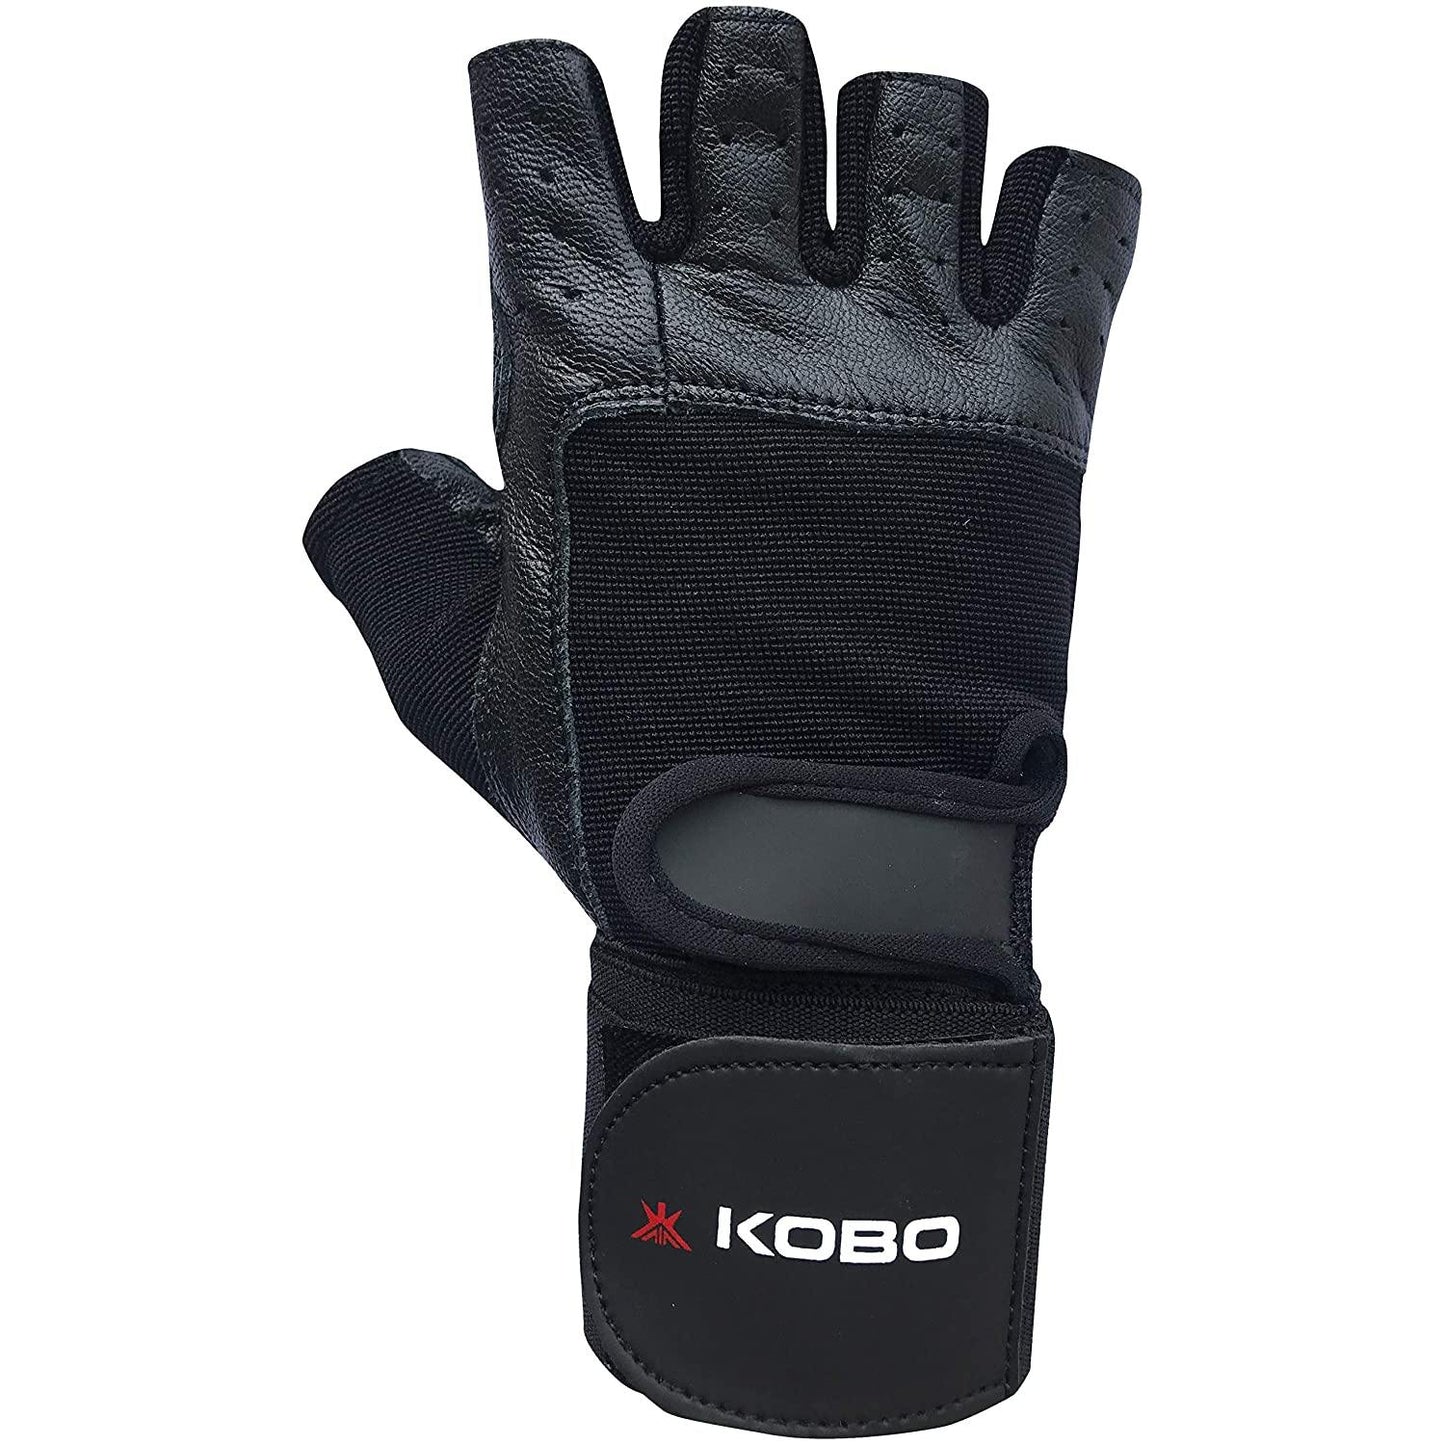 Leather Fitness Gloves/Weight Lifting Gloves/Gym Gloves Black - Best Price online Prokicksports.com